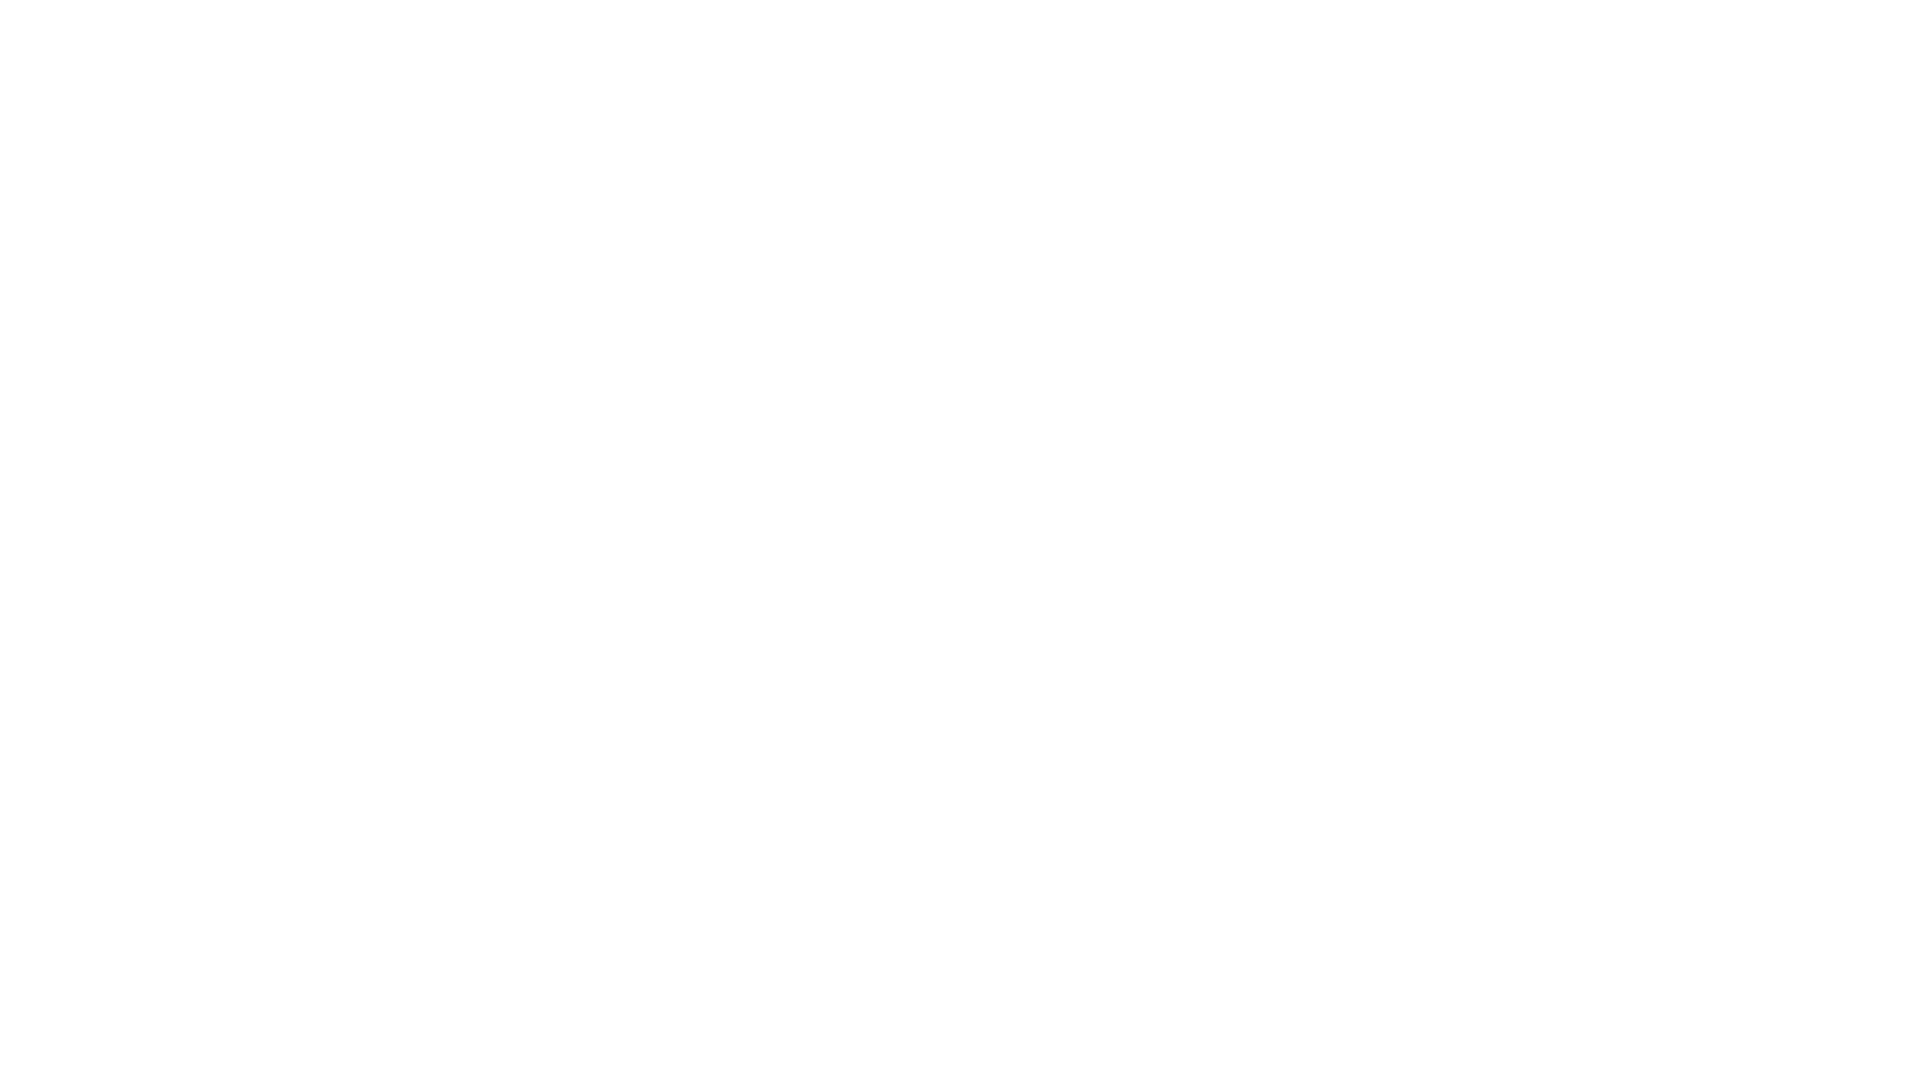 Lovelenscapes Photo + Film